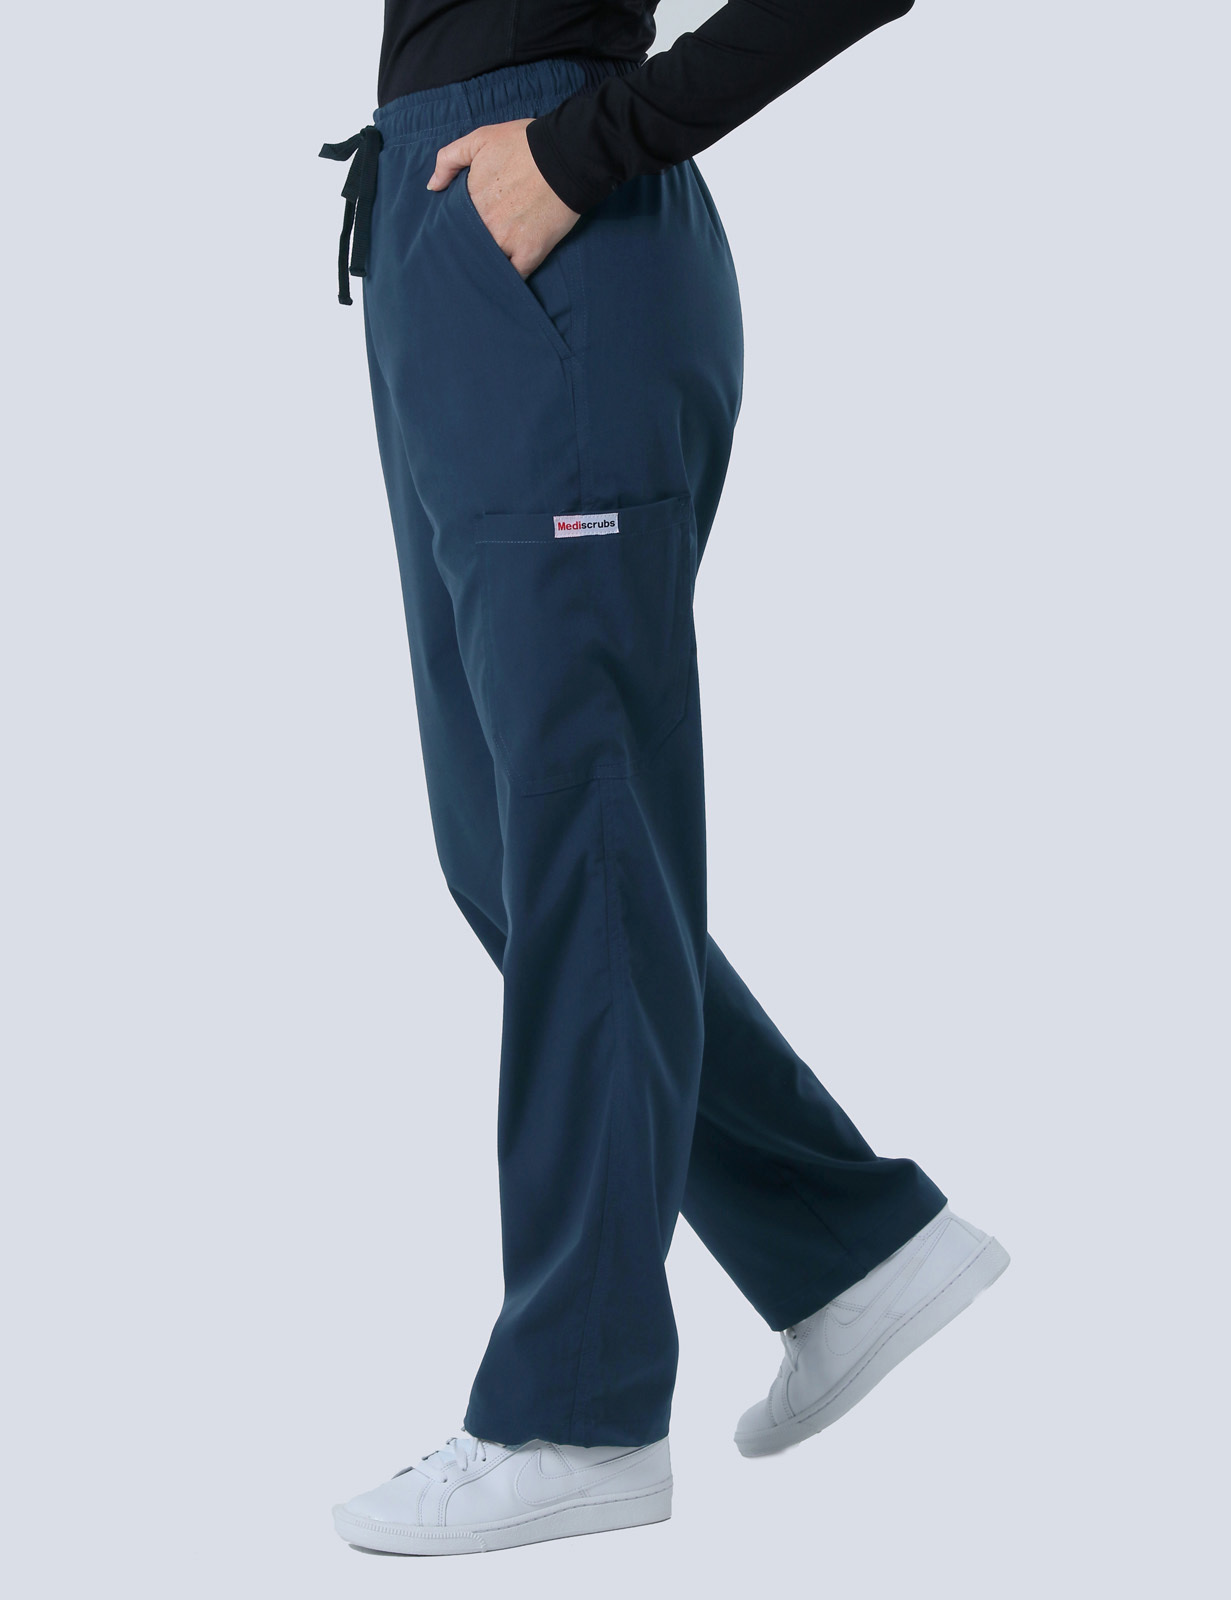 Ipswich Hospital Nurse - Ward 7C Uniform Set Bundle (Women's Fit Spandex Top and Cargo Pants in Navy incl Logos)